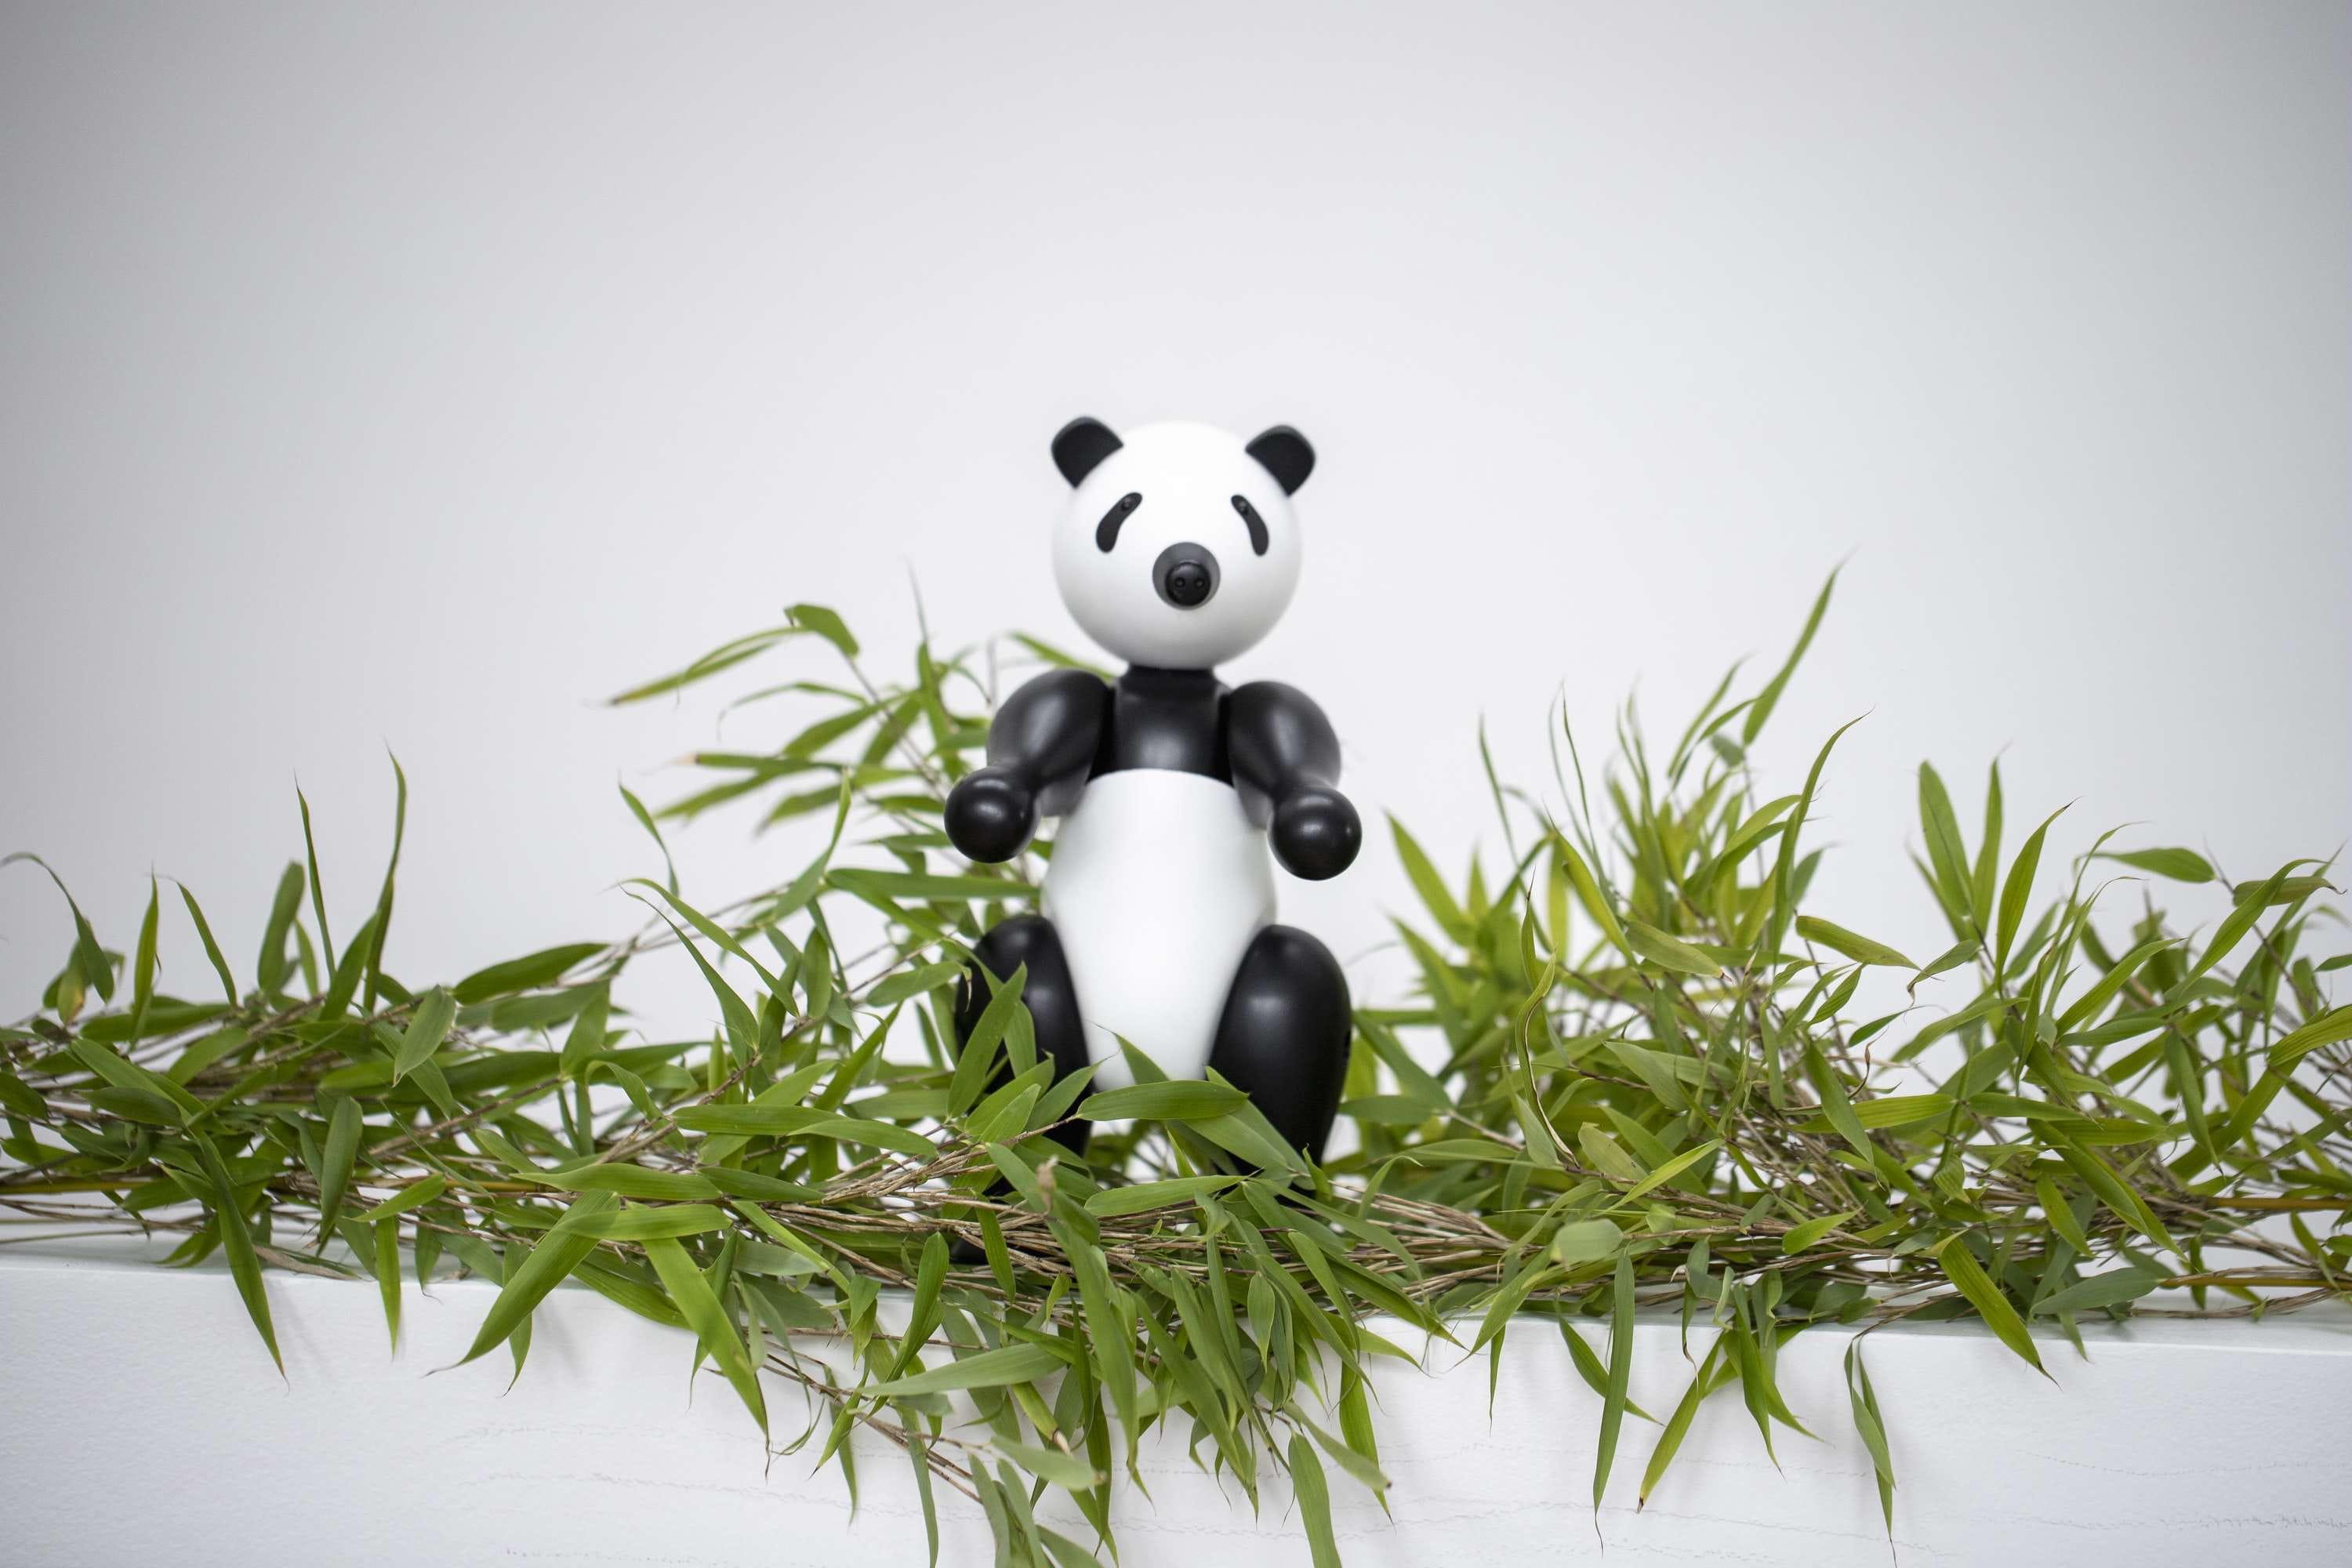 Kay Bojesen Panda Bear, liten